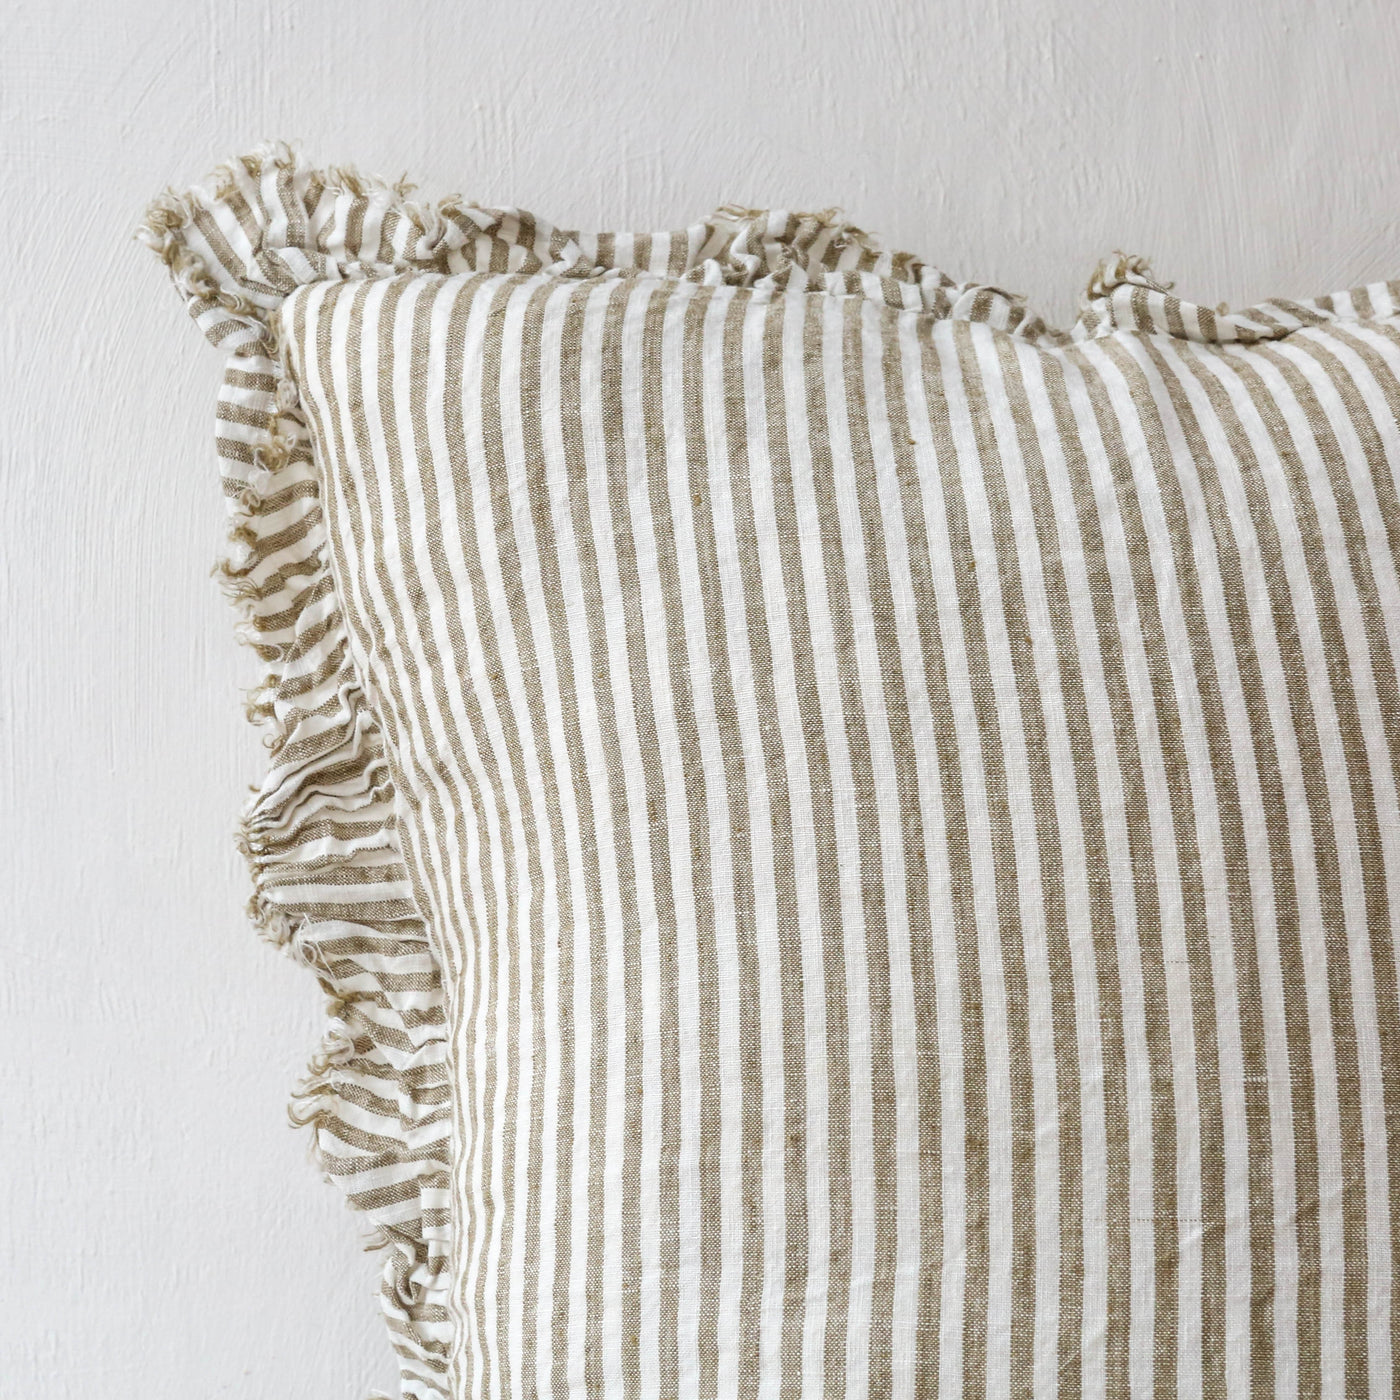 Ruffle Cushion Cover - Olive Stripe